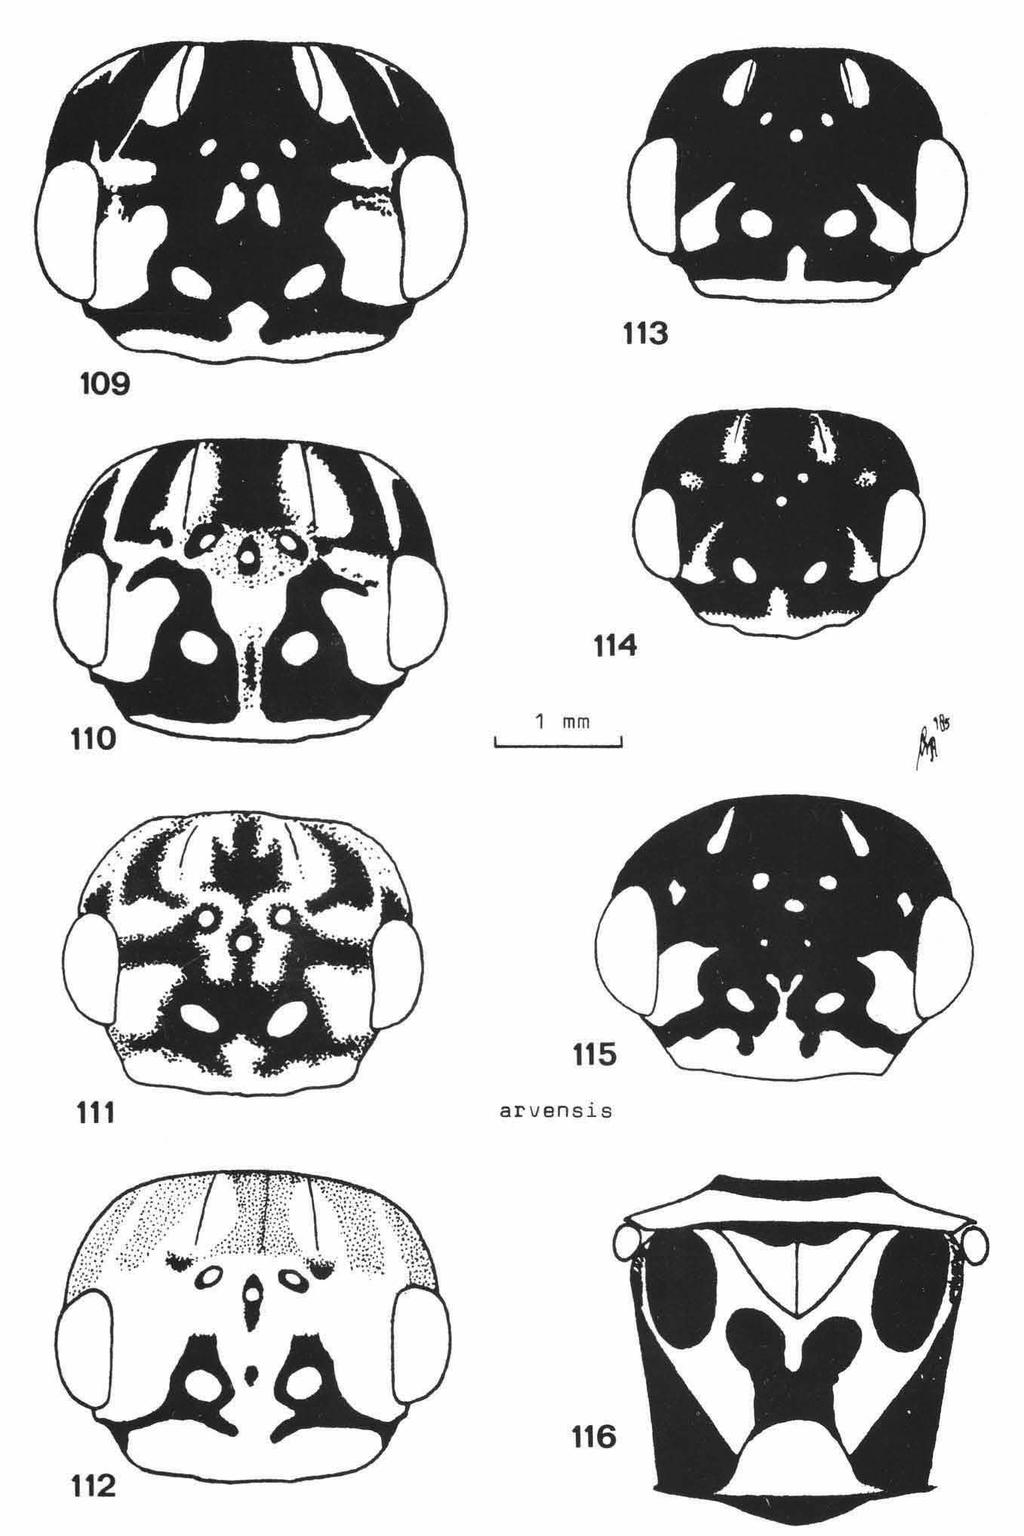 68 ZOOLOGISCHE VERHANDELINGEN 234 (1986) Fig. 109. Cephalcia arvensis Panzer, 9, Finland. Figs. 110, U6. id., 9, CSSR, N. Bohemia. Fig. HI. id., 9, Finland. Fig. 112. id. (f.